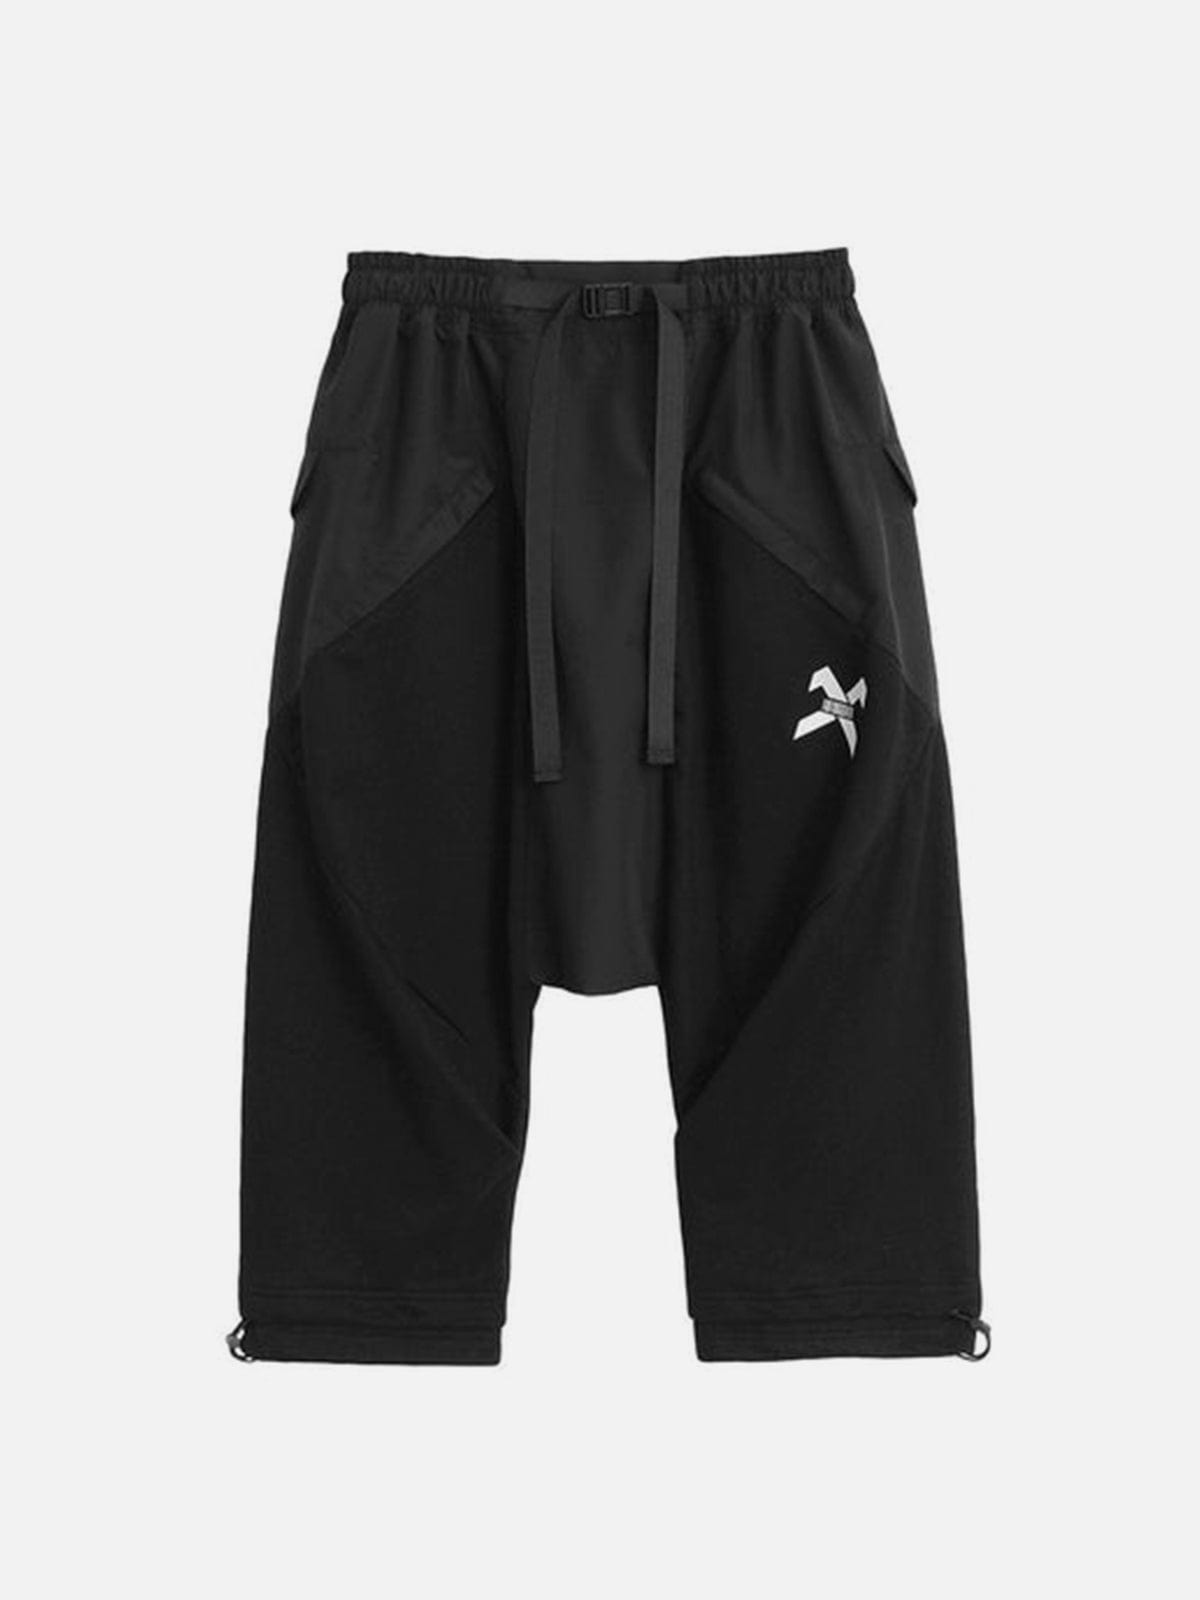 Multi Pockets Drawstring Calf Pants Streetwear Brand Techwear Combat Tactical YUGEN THEORY